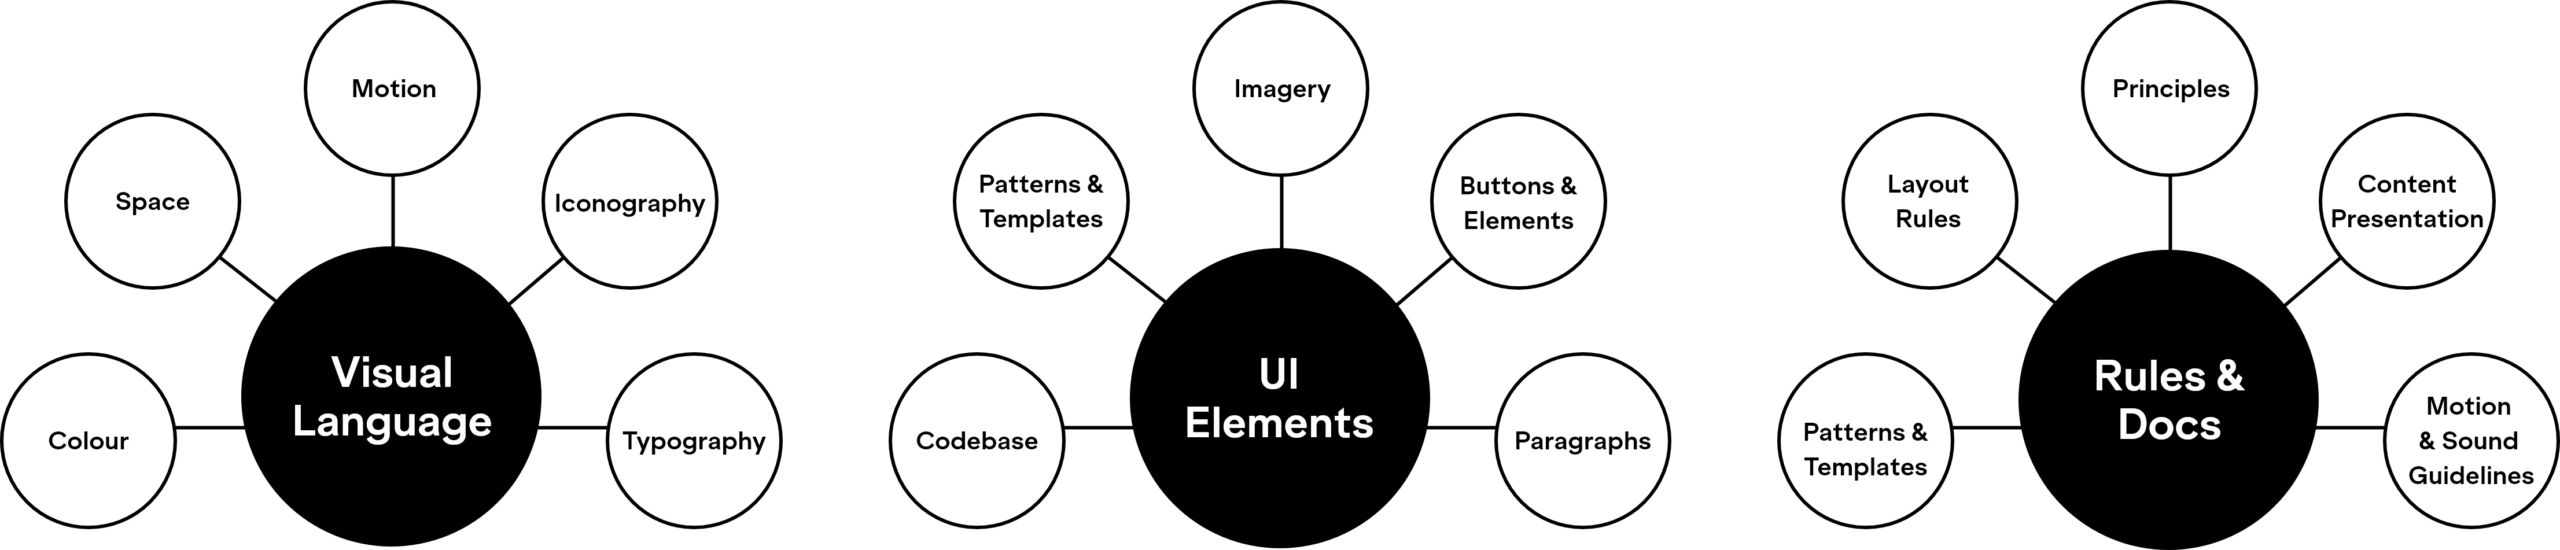 Design System Common Elements